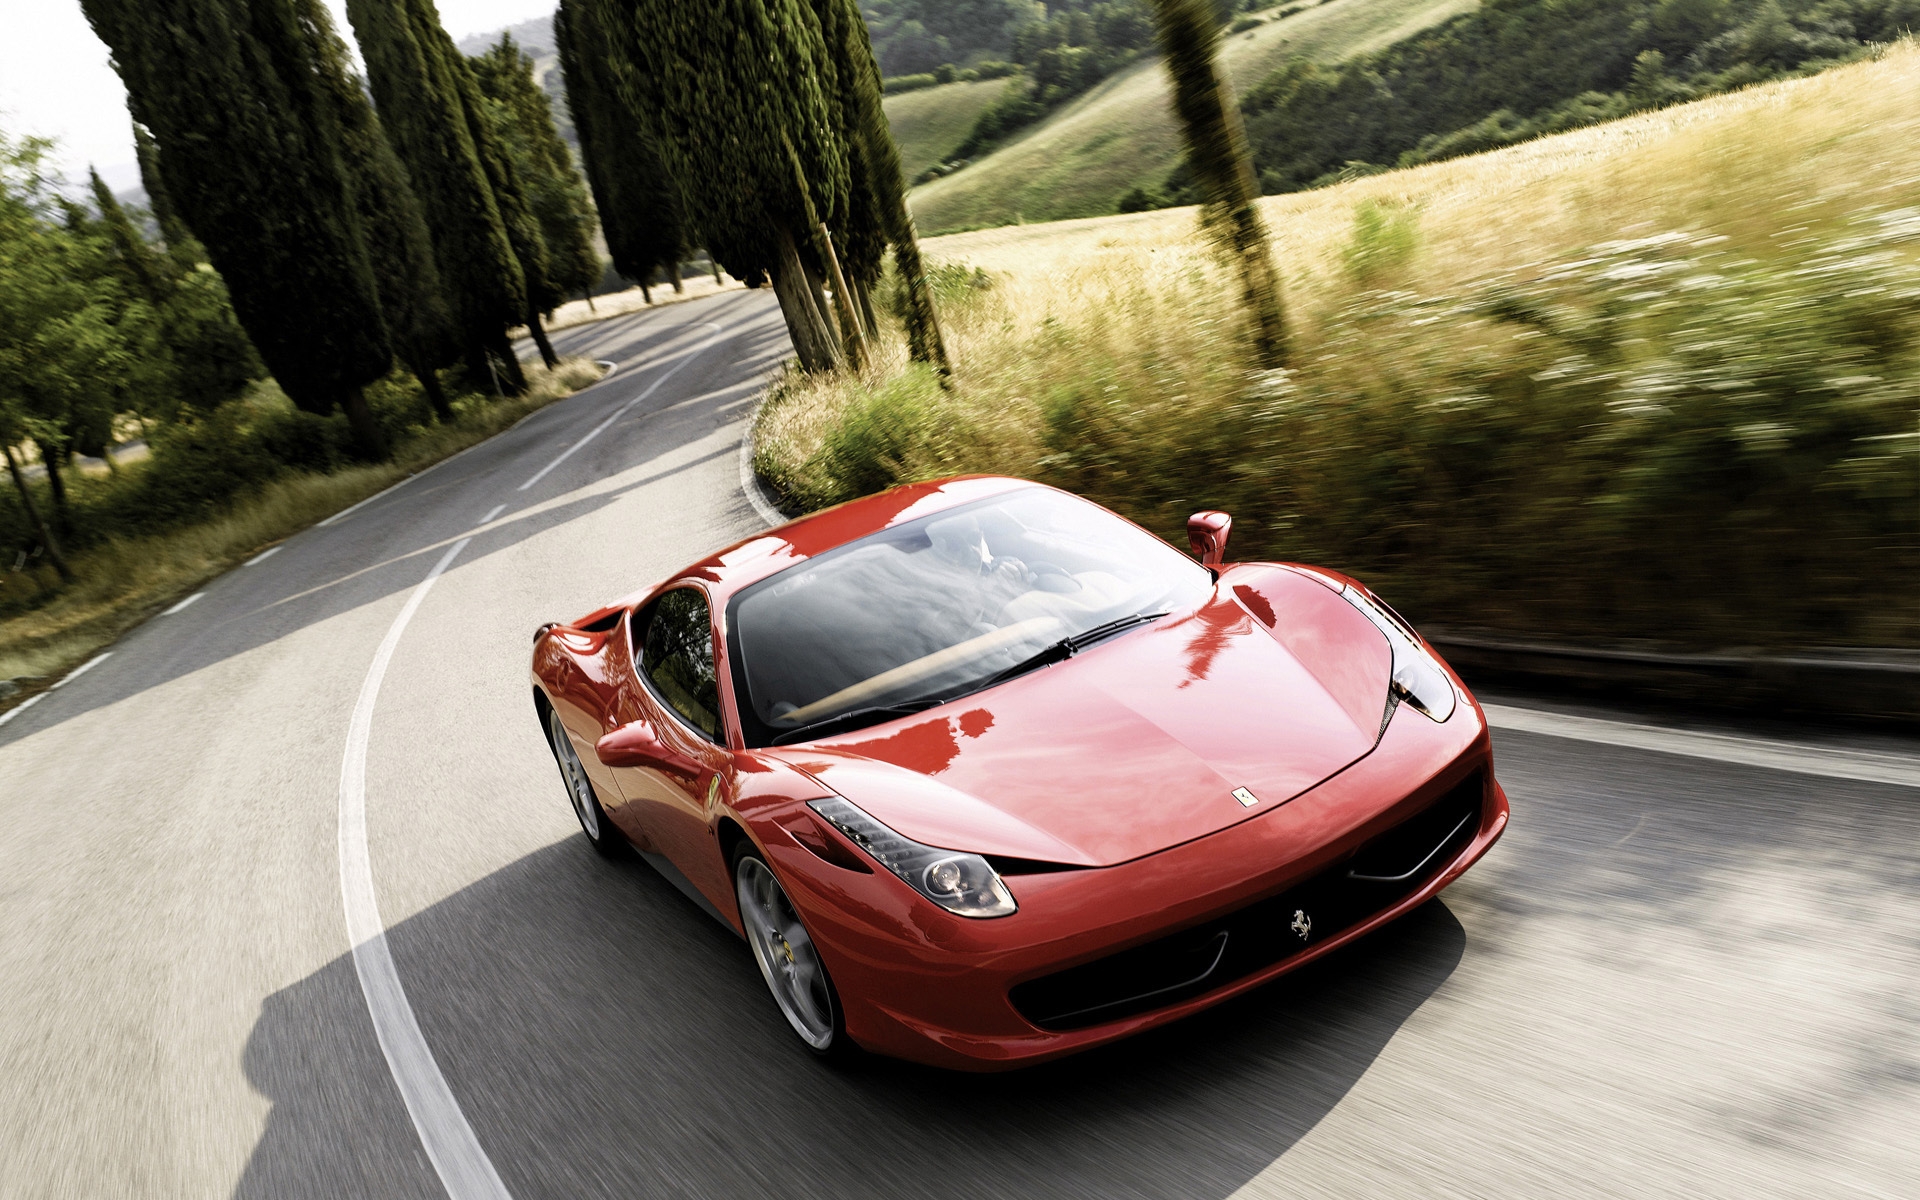 Descarga gratuita de fondo de pantalla para móvil de Ferrari, Transporte, Automóvil.